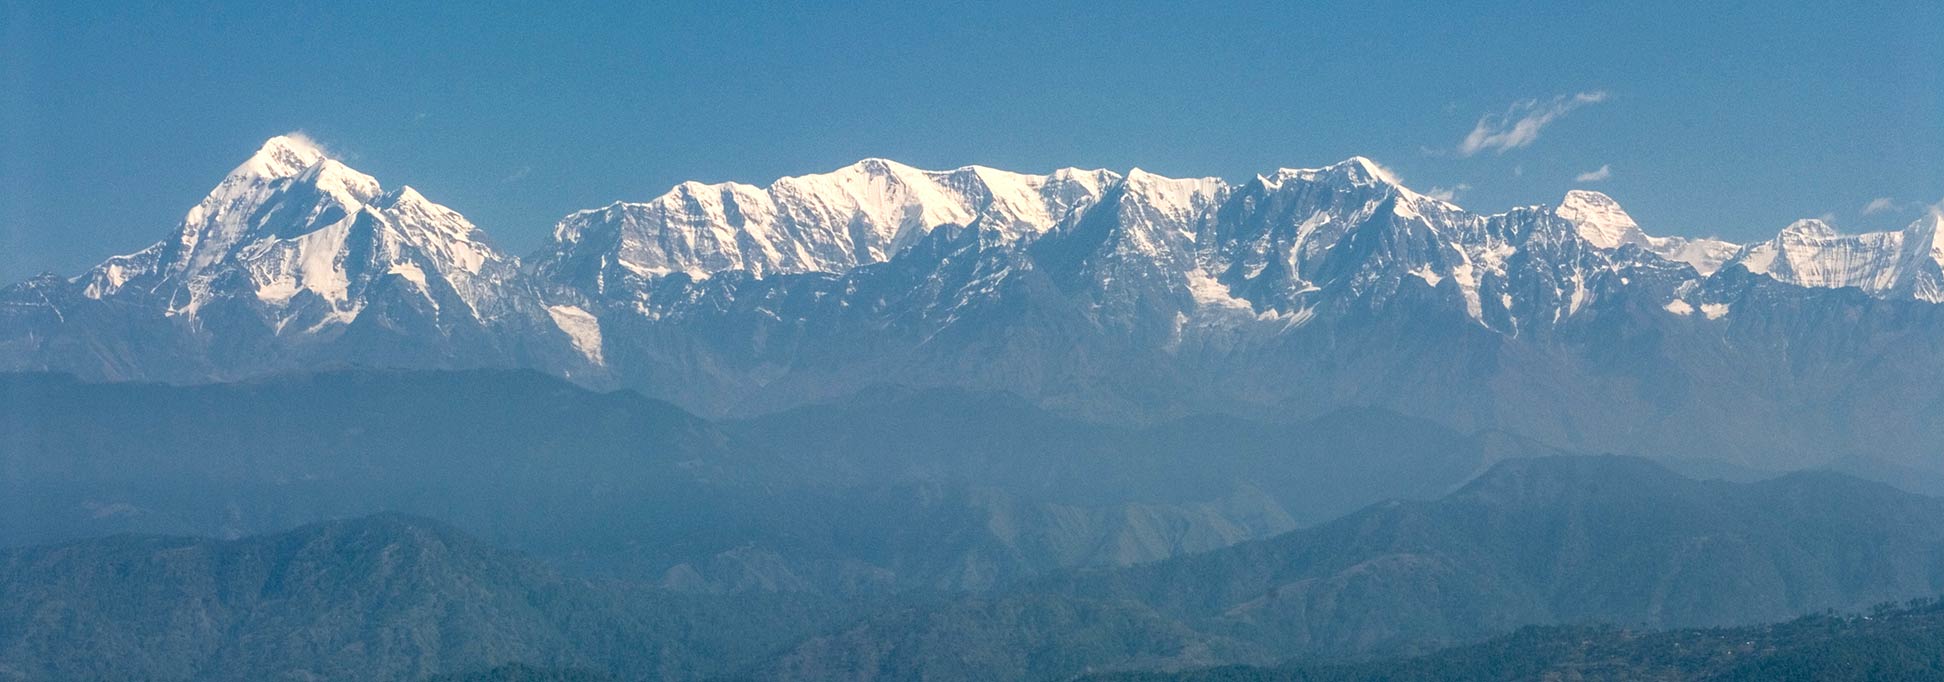 Peaks of Trishul and Nanda Devi and the Himalayan mountain range